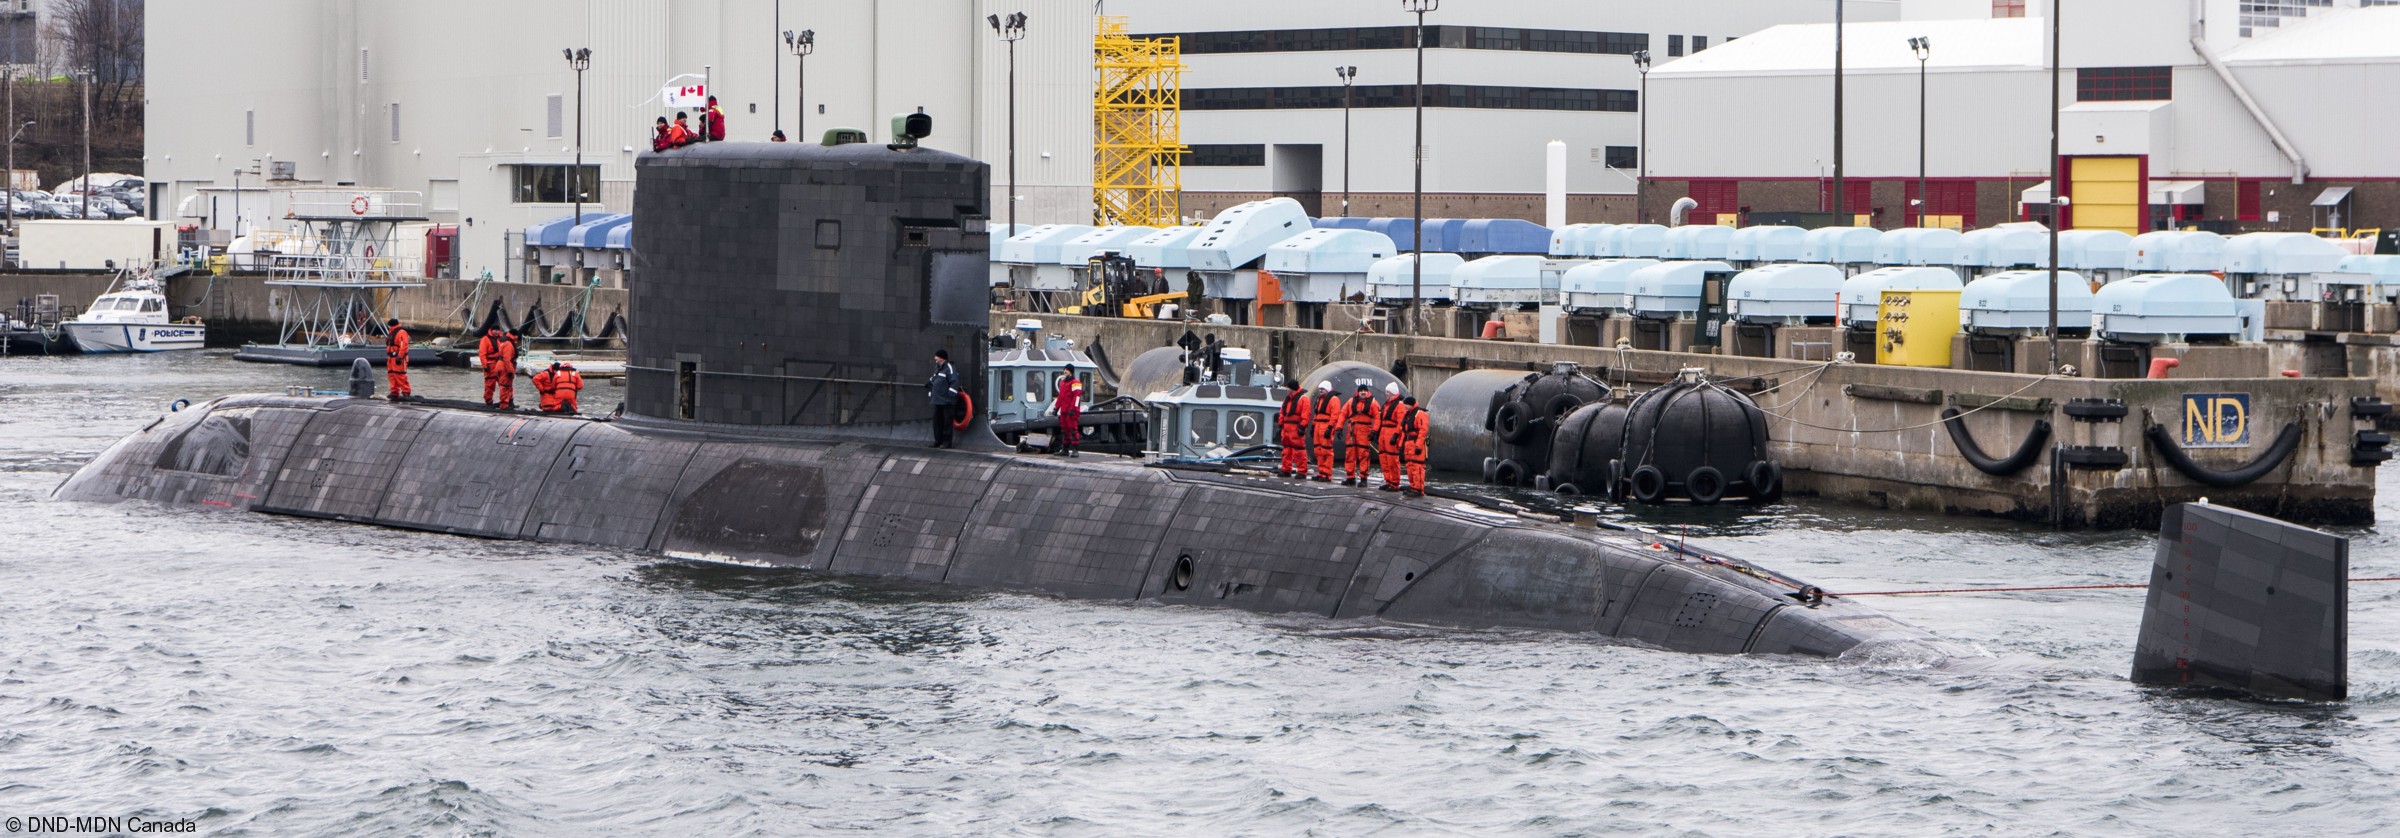 ssk-877 hmcs windsor victoria upholder class attack submarine hunter killer ncsm royal canadian navy 18